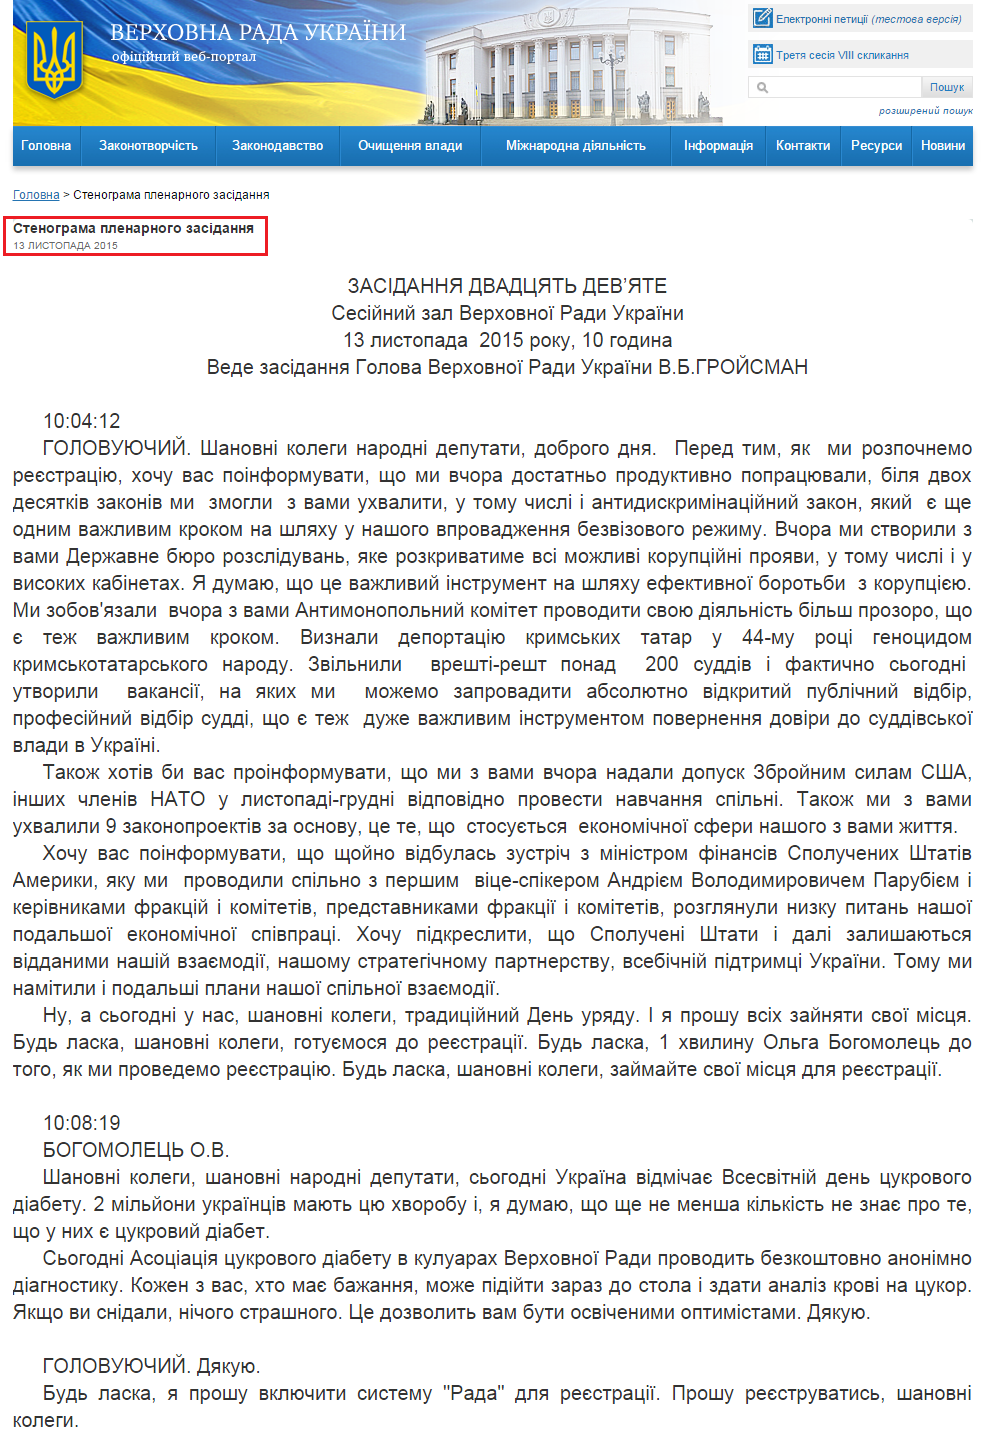 http://iportal.rada.gov.ua/meeting/stenogr/show/6043.html